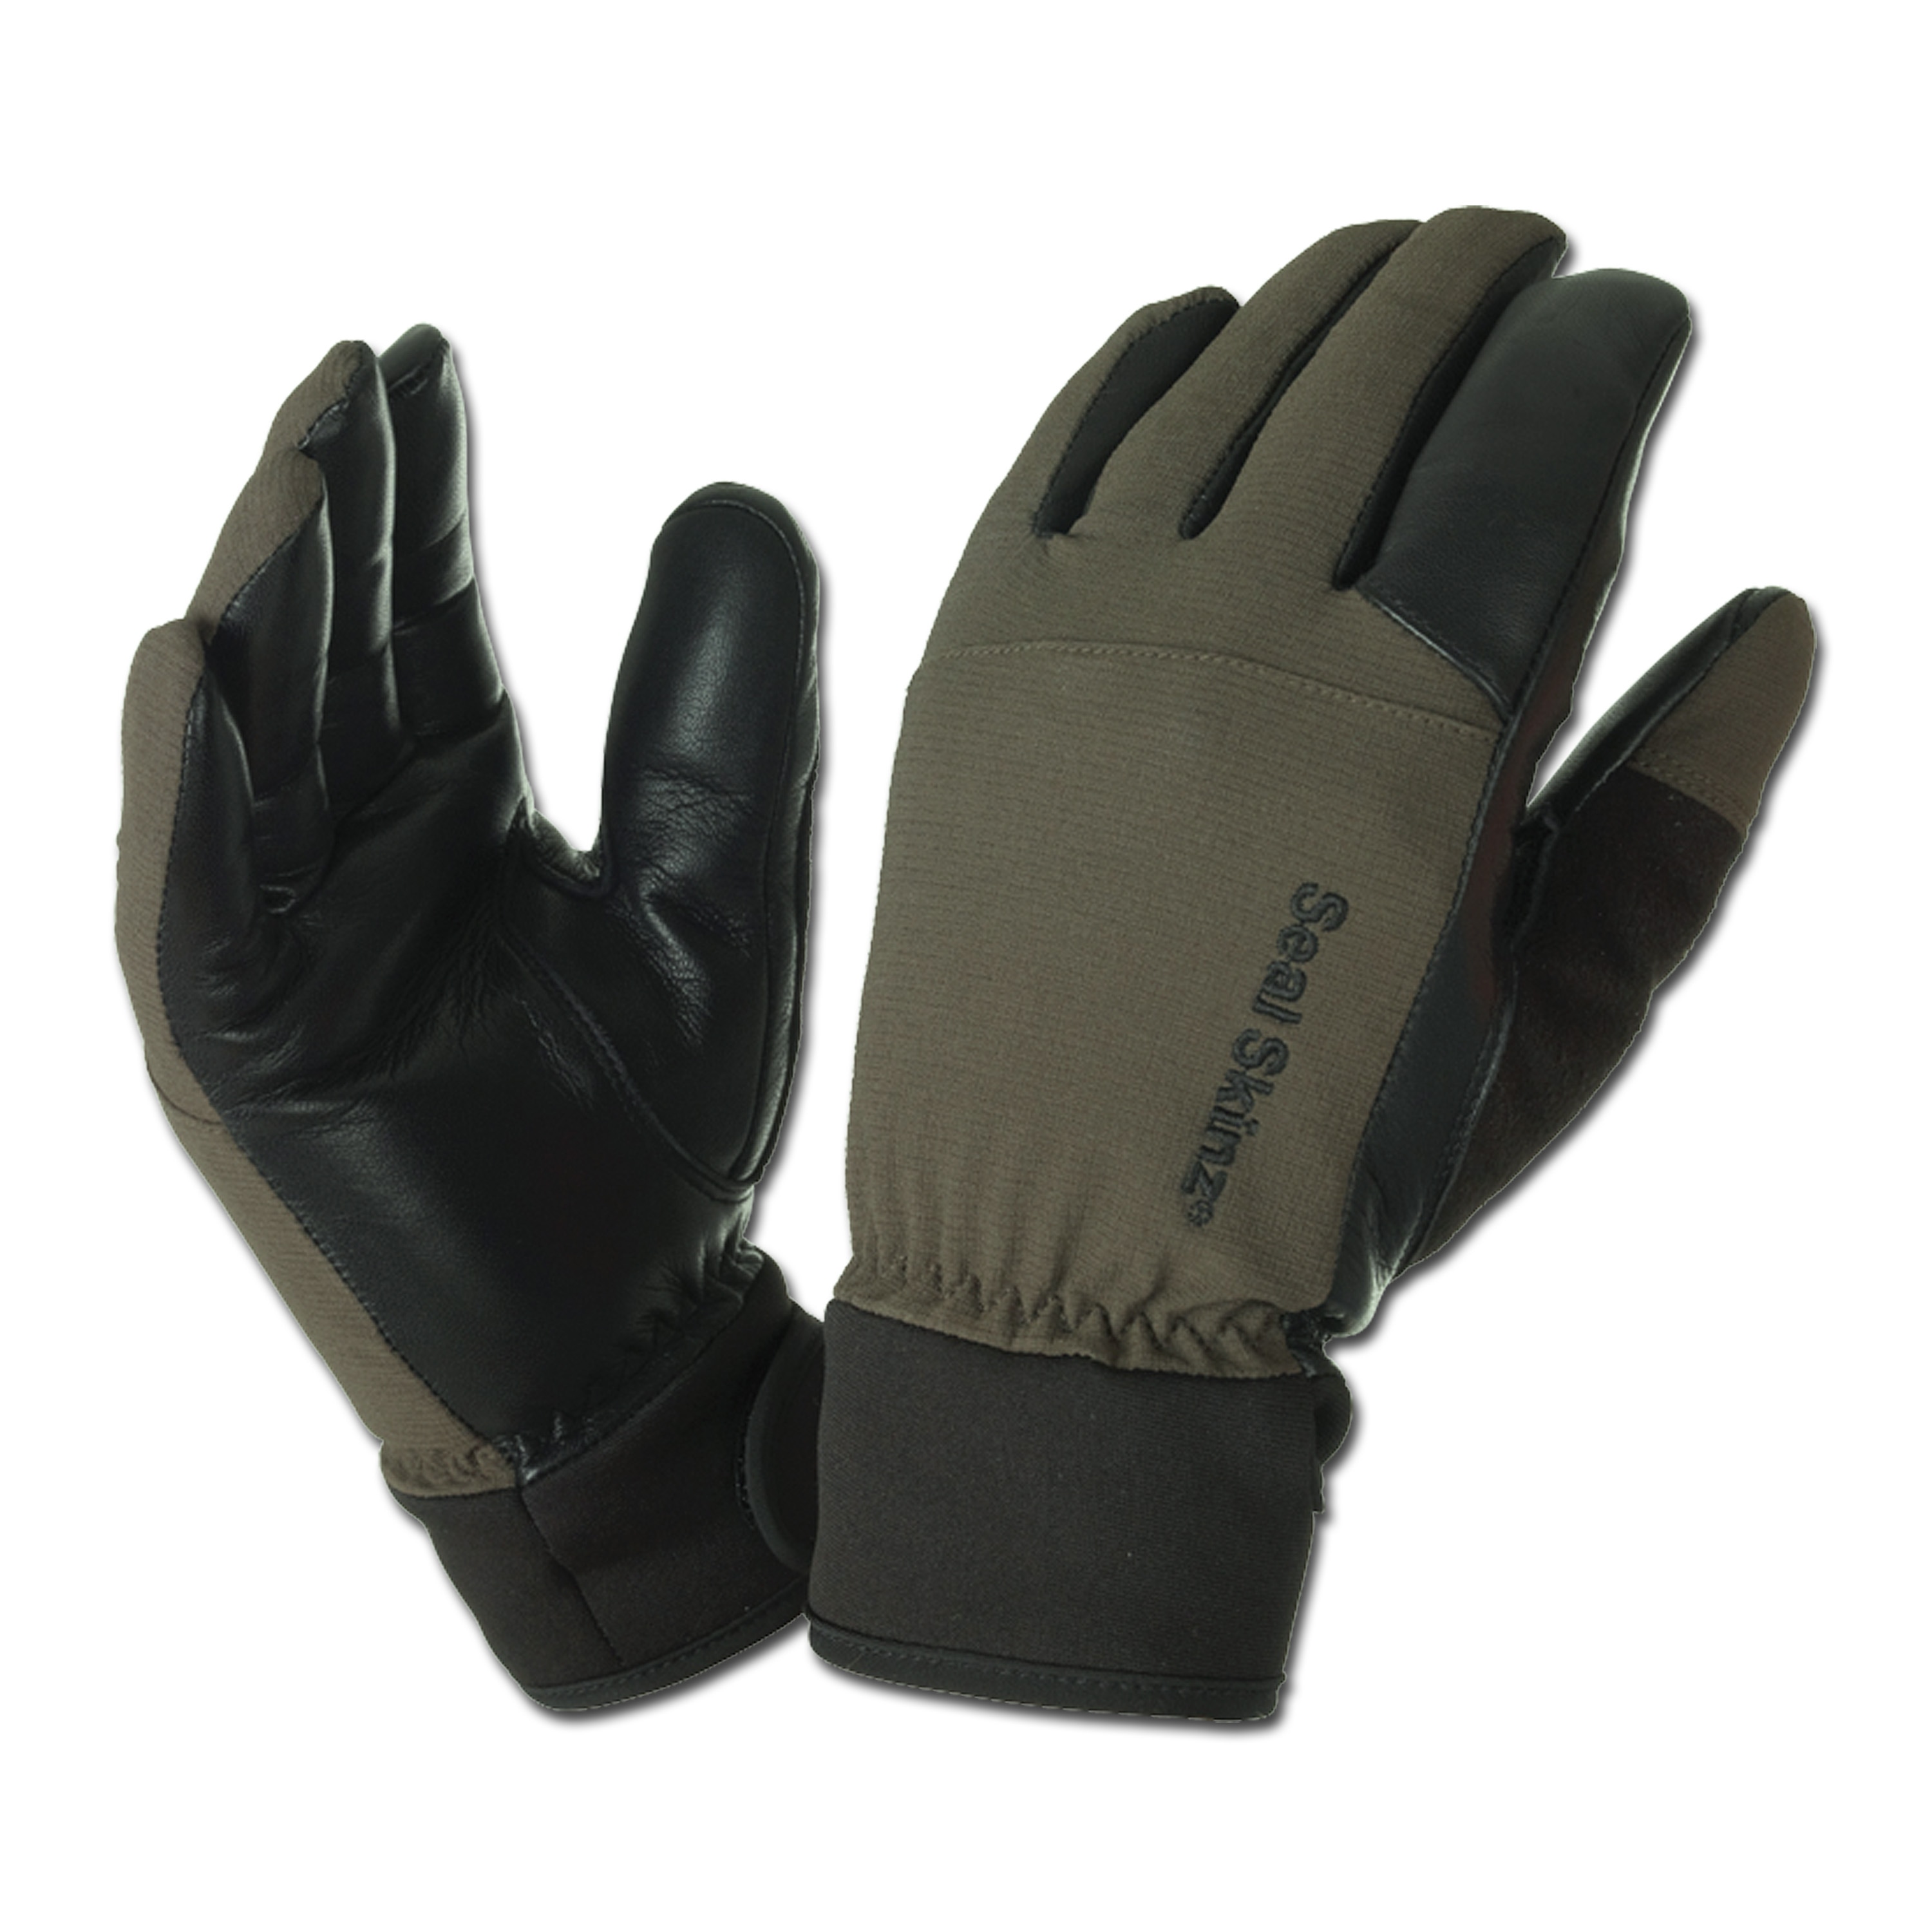 Shooting Glove Leather 100% Waterproof & Breathable SealSkinz